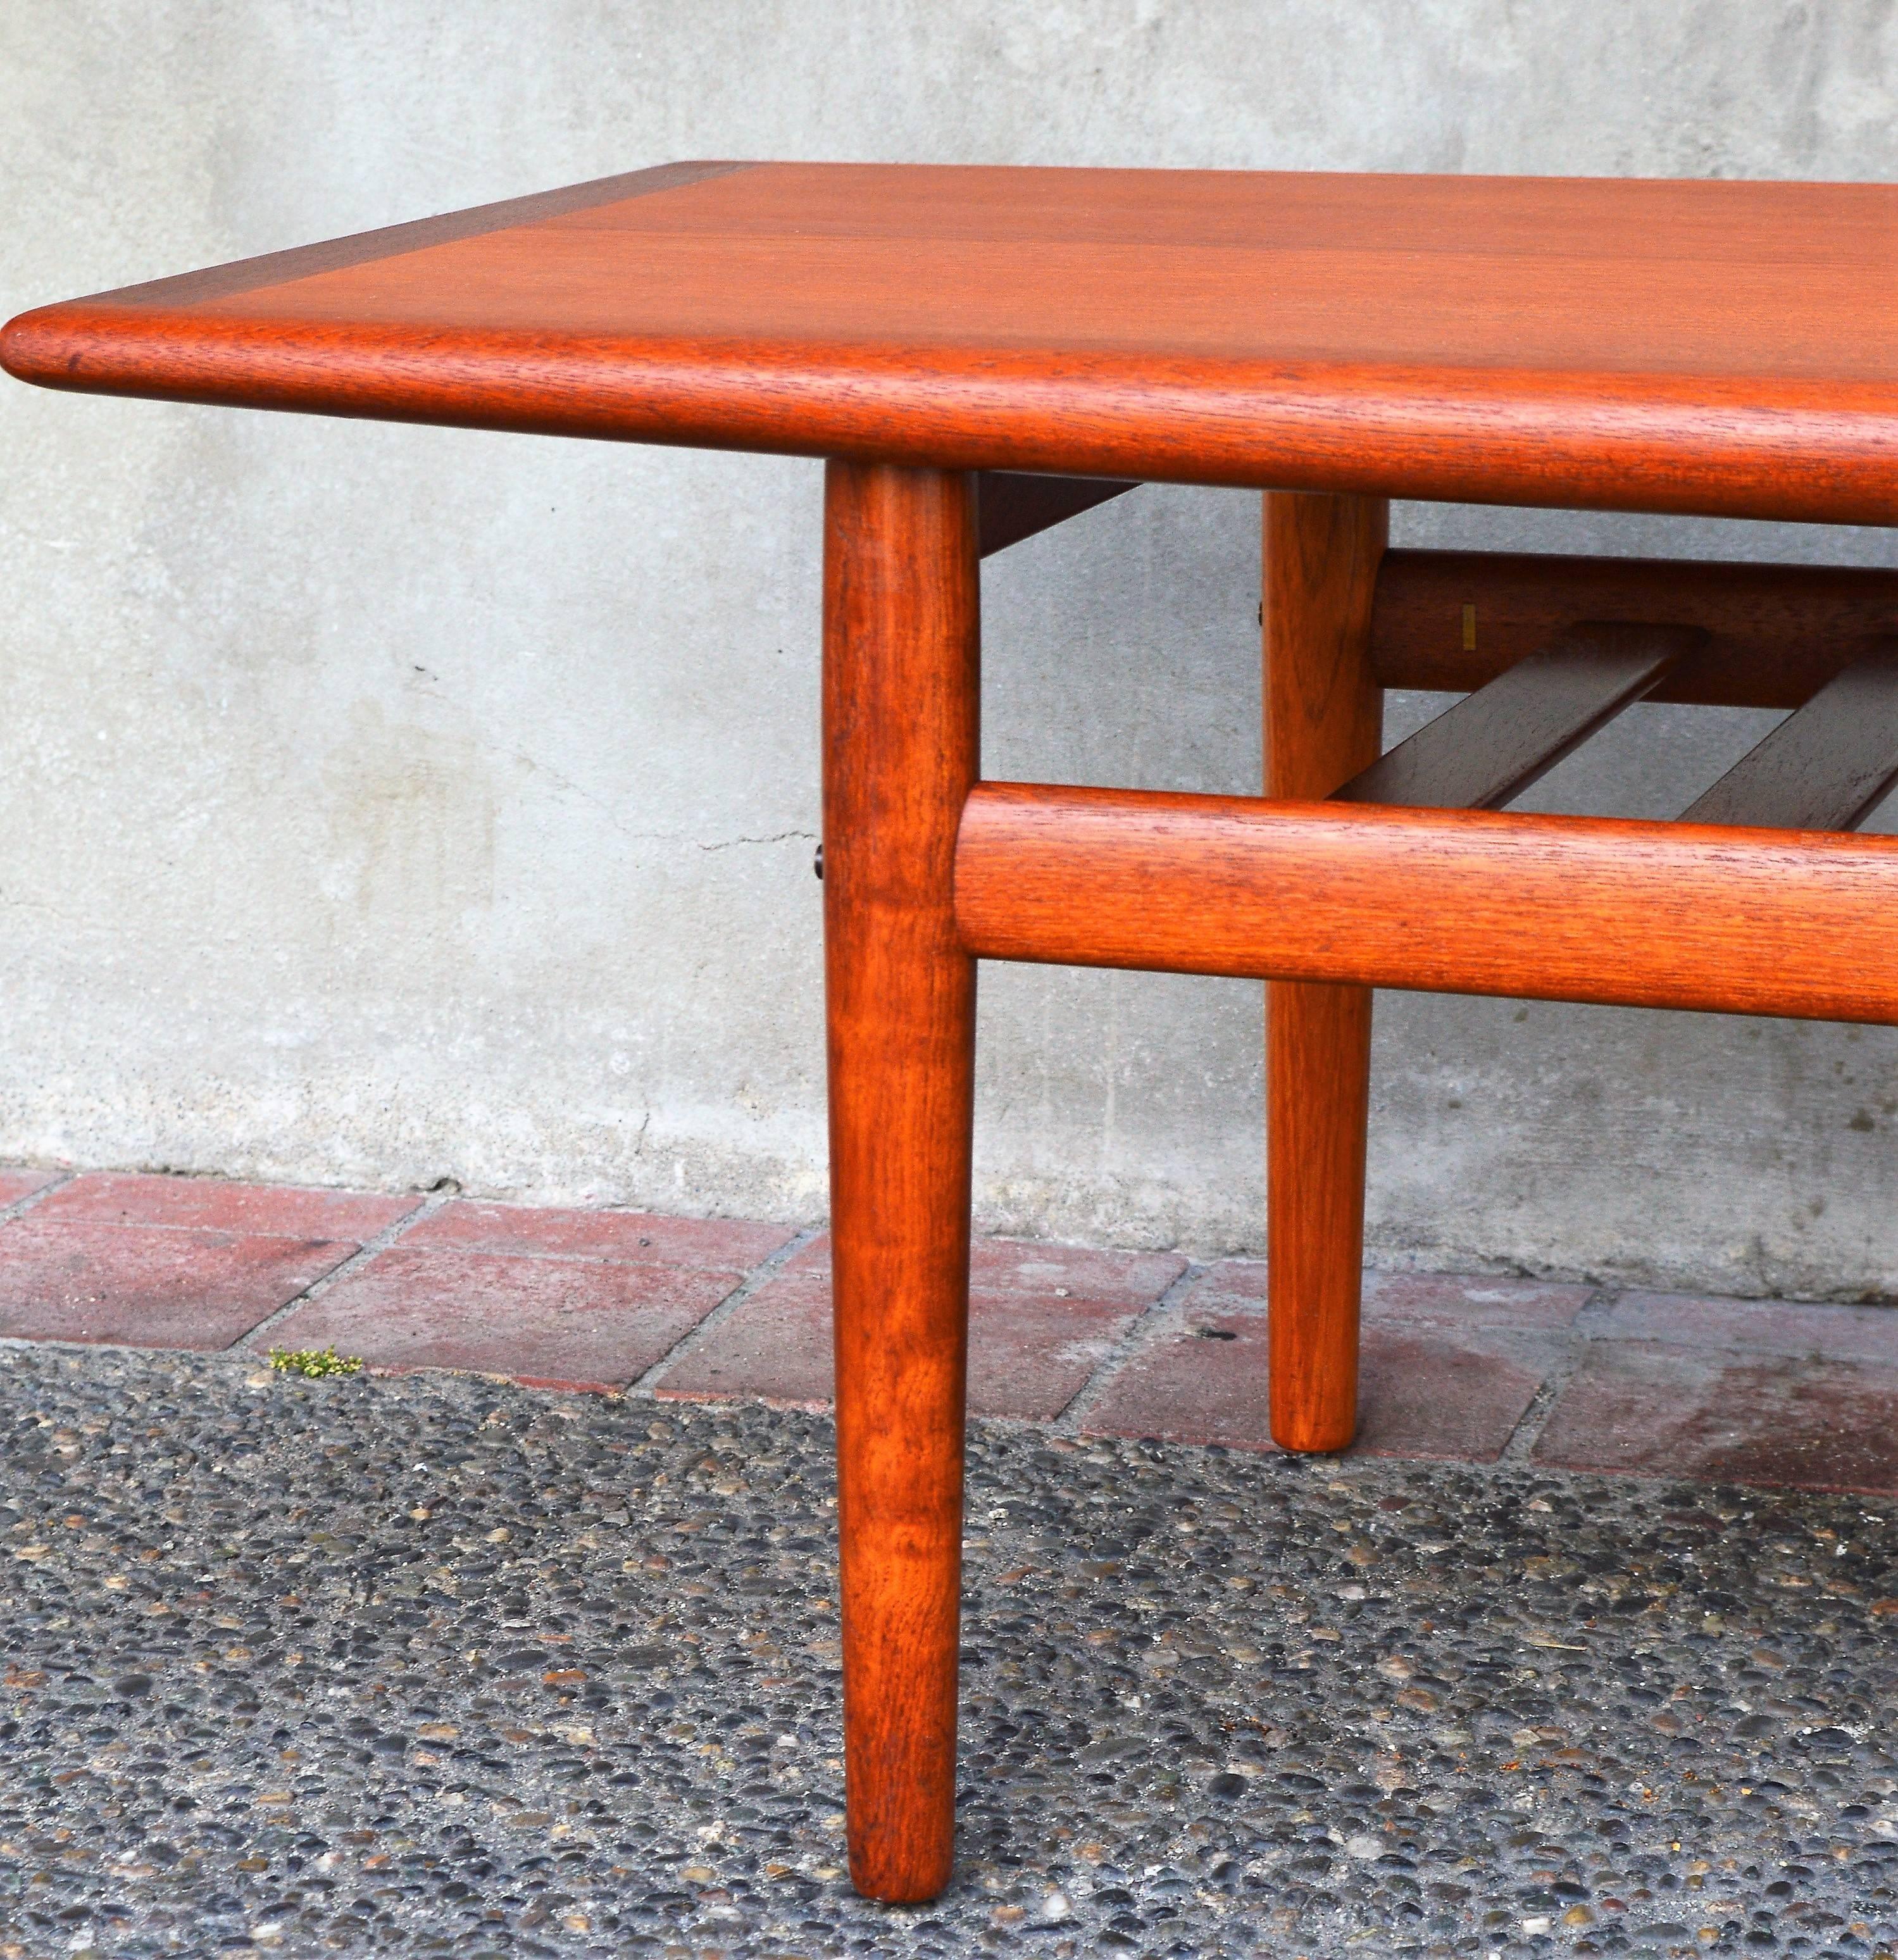 Mid-Century Modern Rare Danish Teak Coffee Table with Shelf by Grete Jalk, Shorter Length